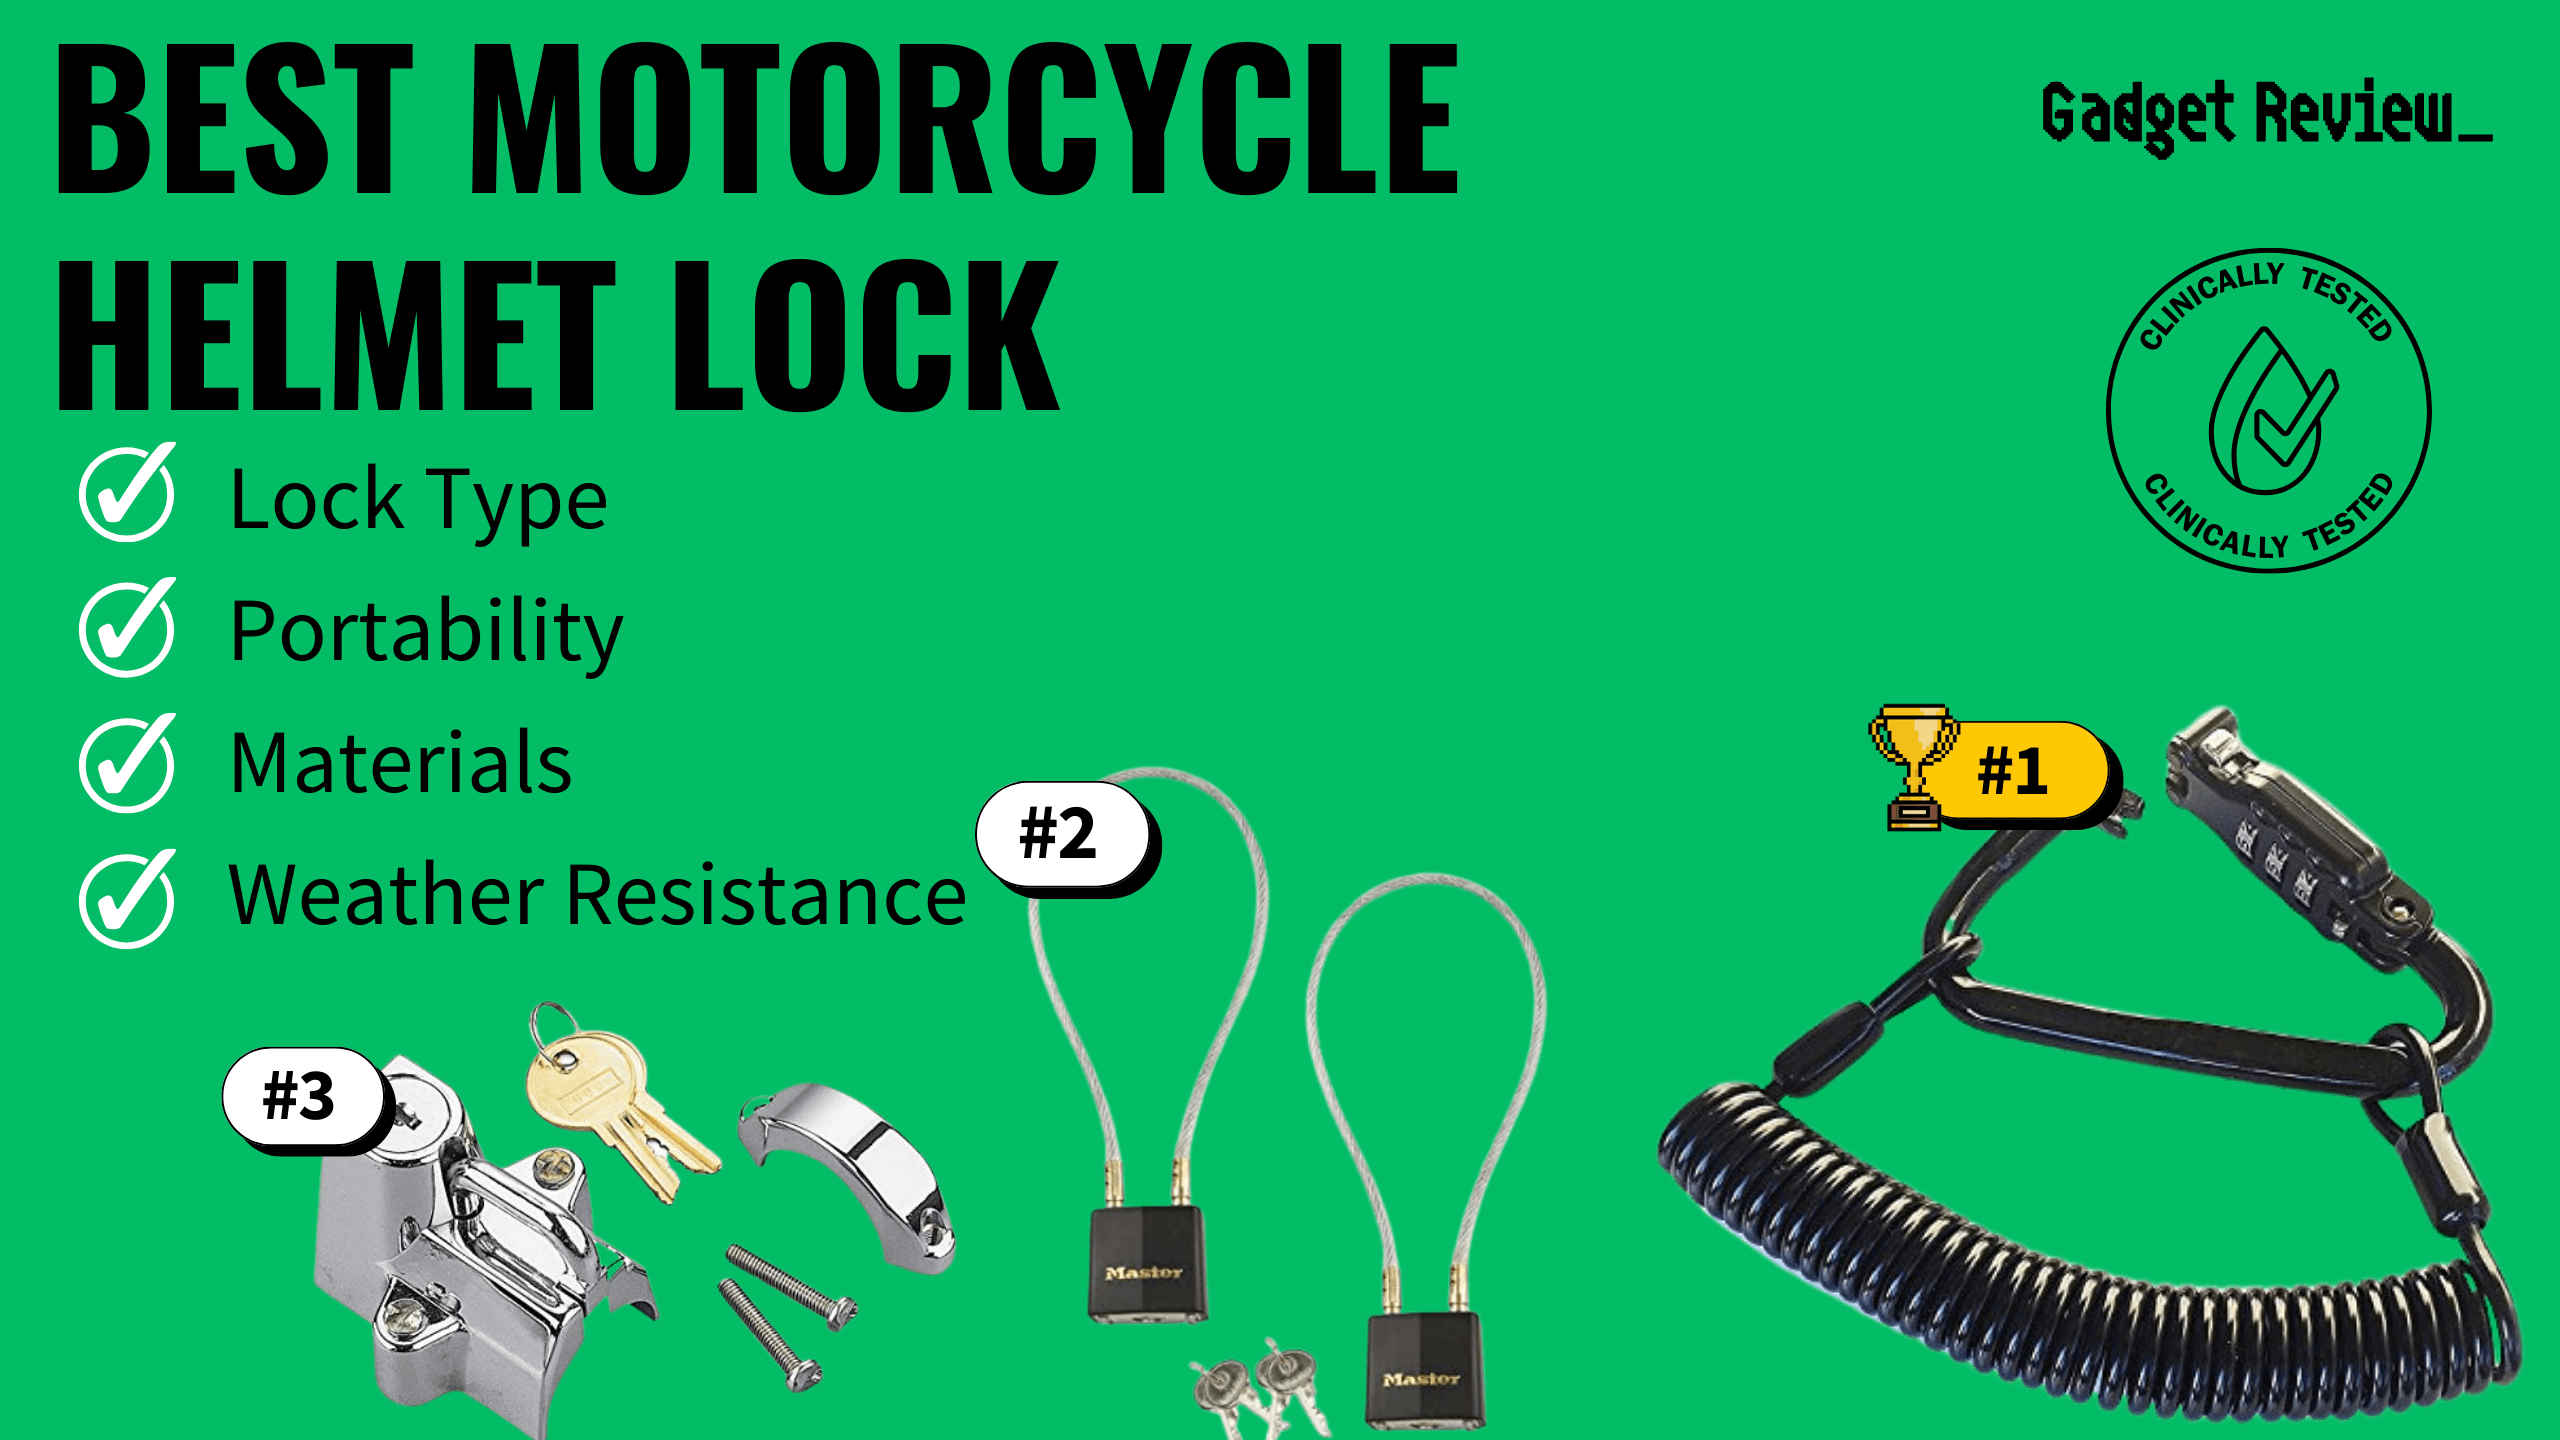 best motorcycle helmet lock featured image that shows the top three best motorcycle models